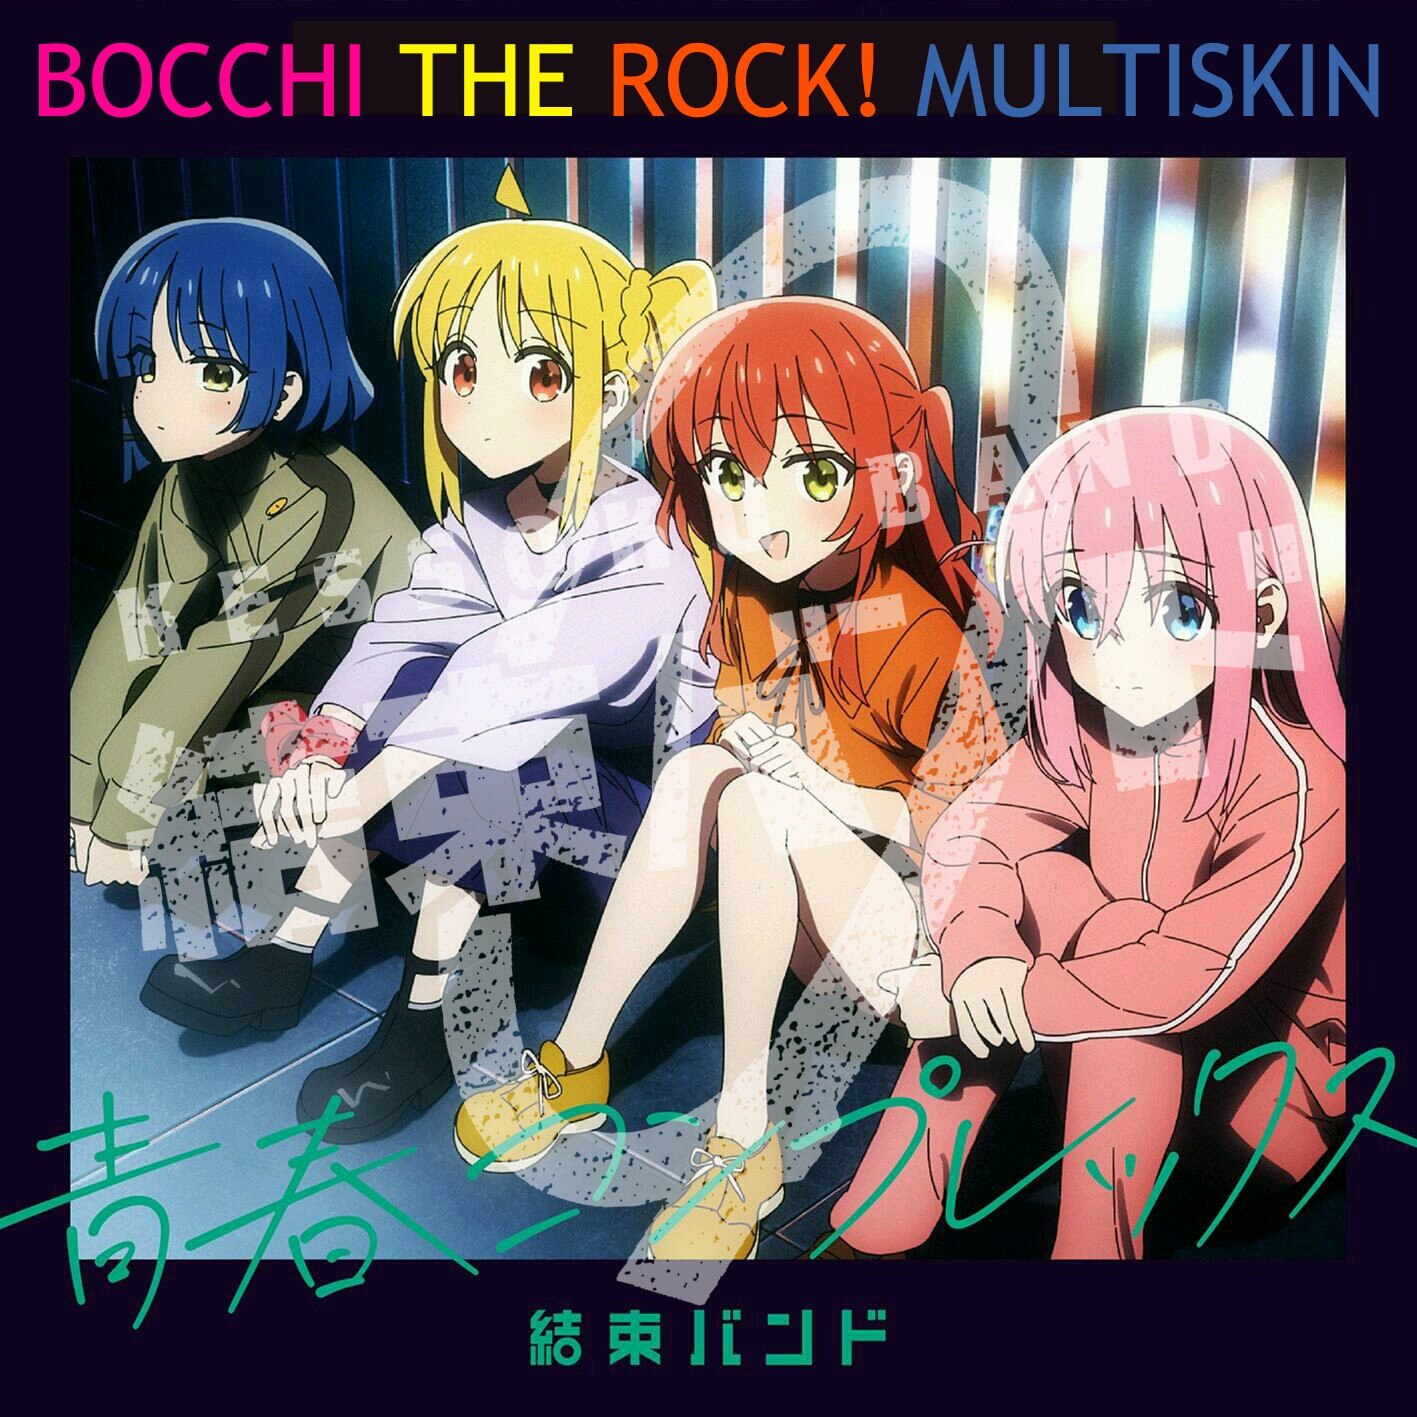 Bocchi Rocks! by TheMushMan on Newgrounds